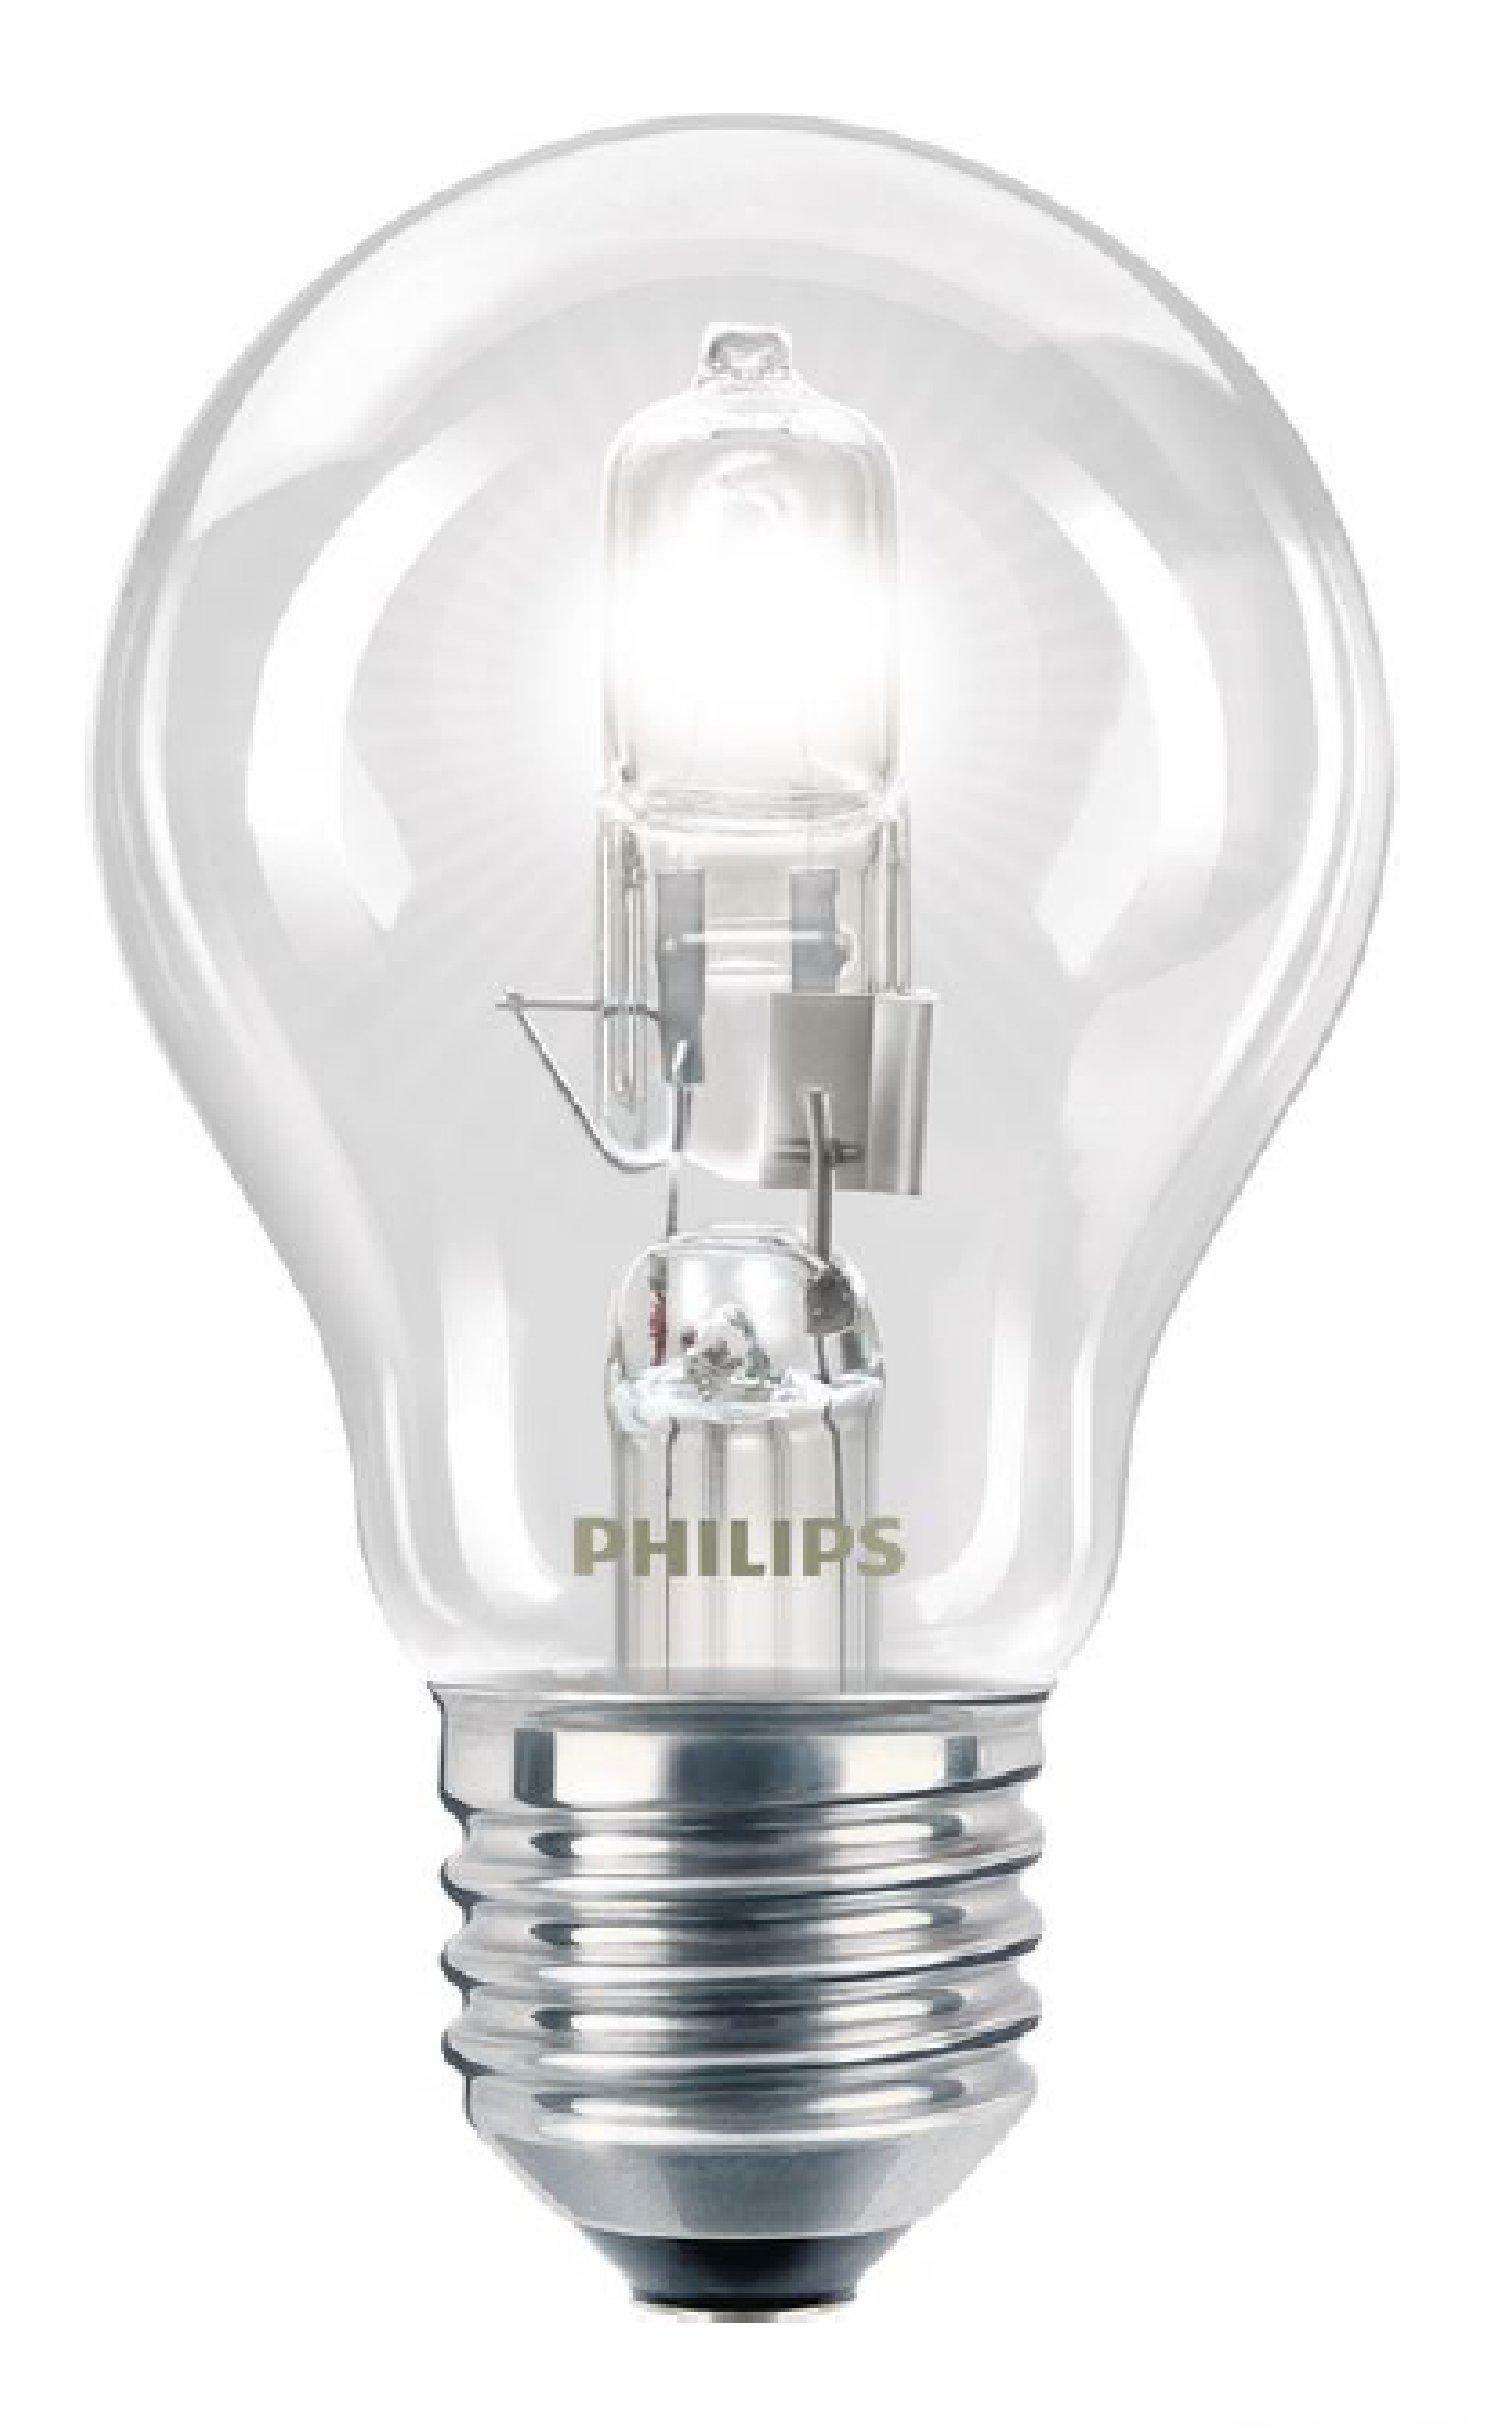 philips philips lampada lampadina alogena ad alta tensione senza riflettore ecoclassic30 42w e27 230v a60 cl 1c halogen classic goccia ec42cl